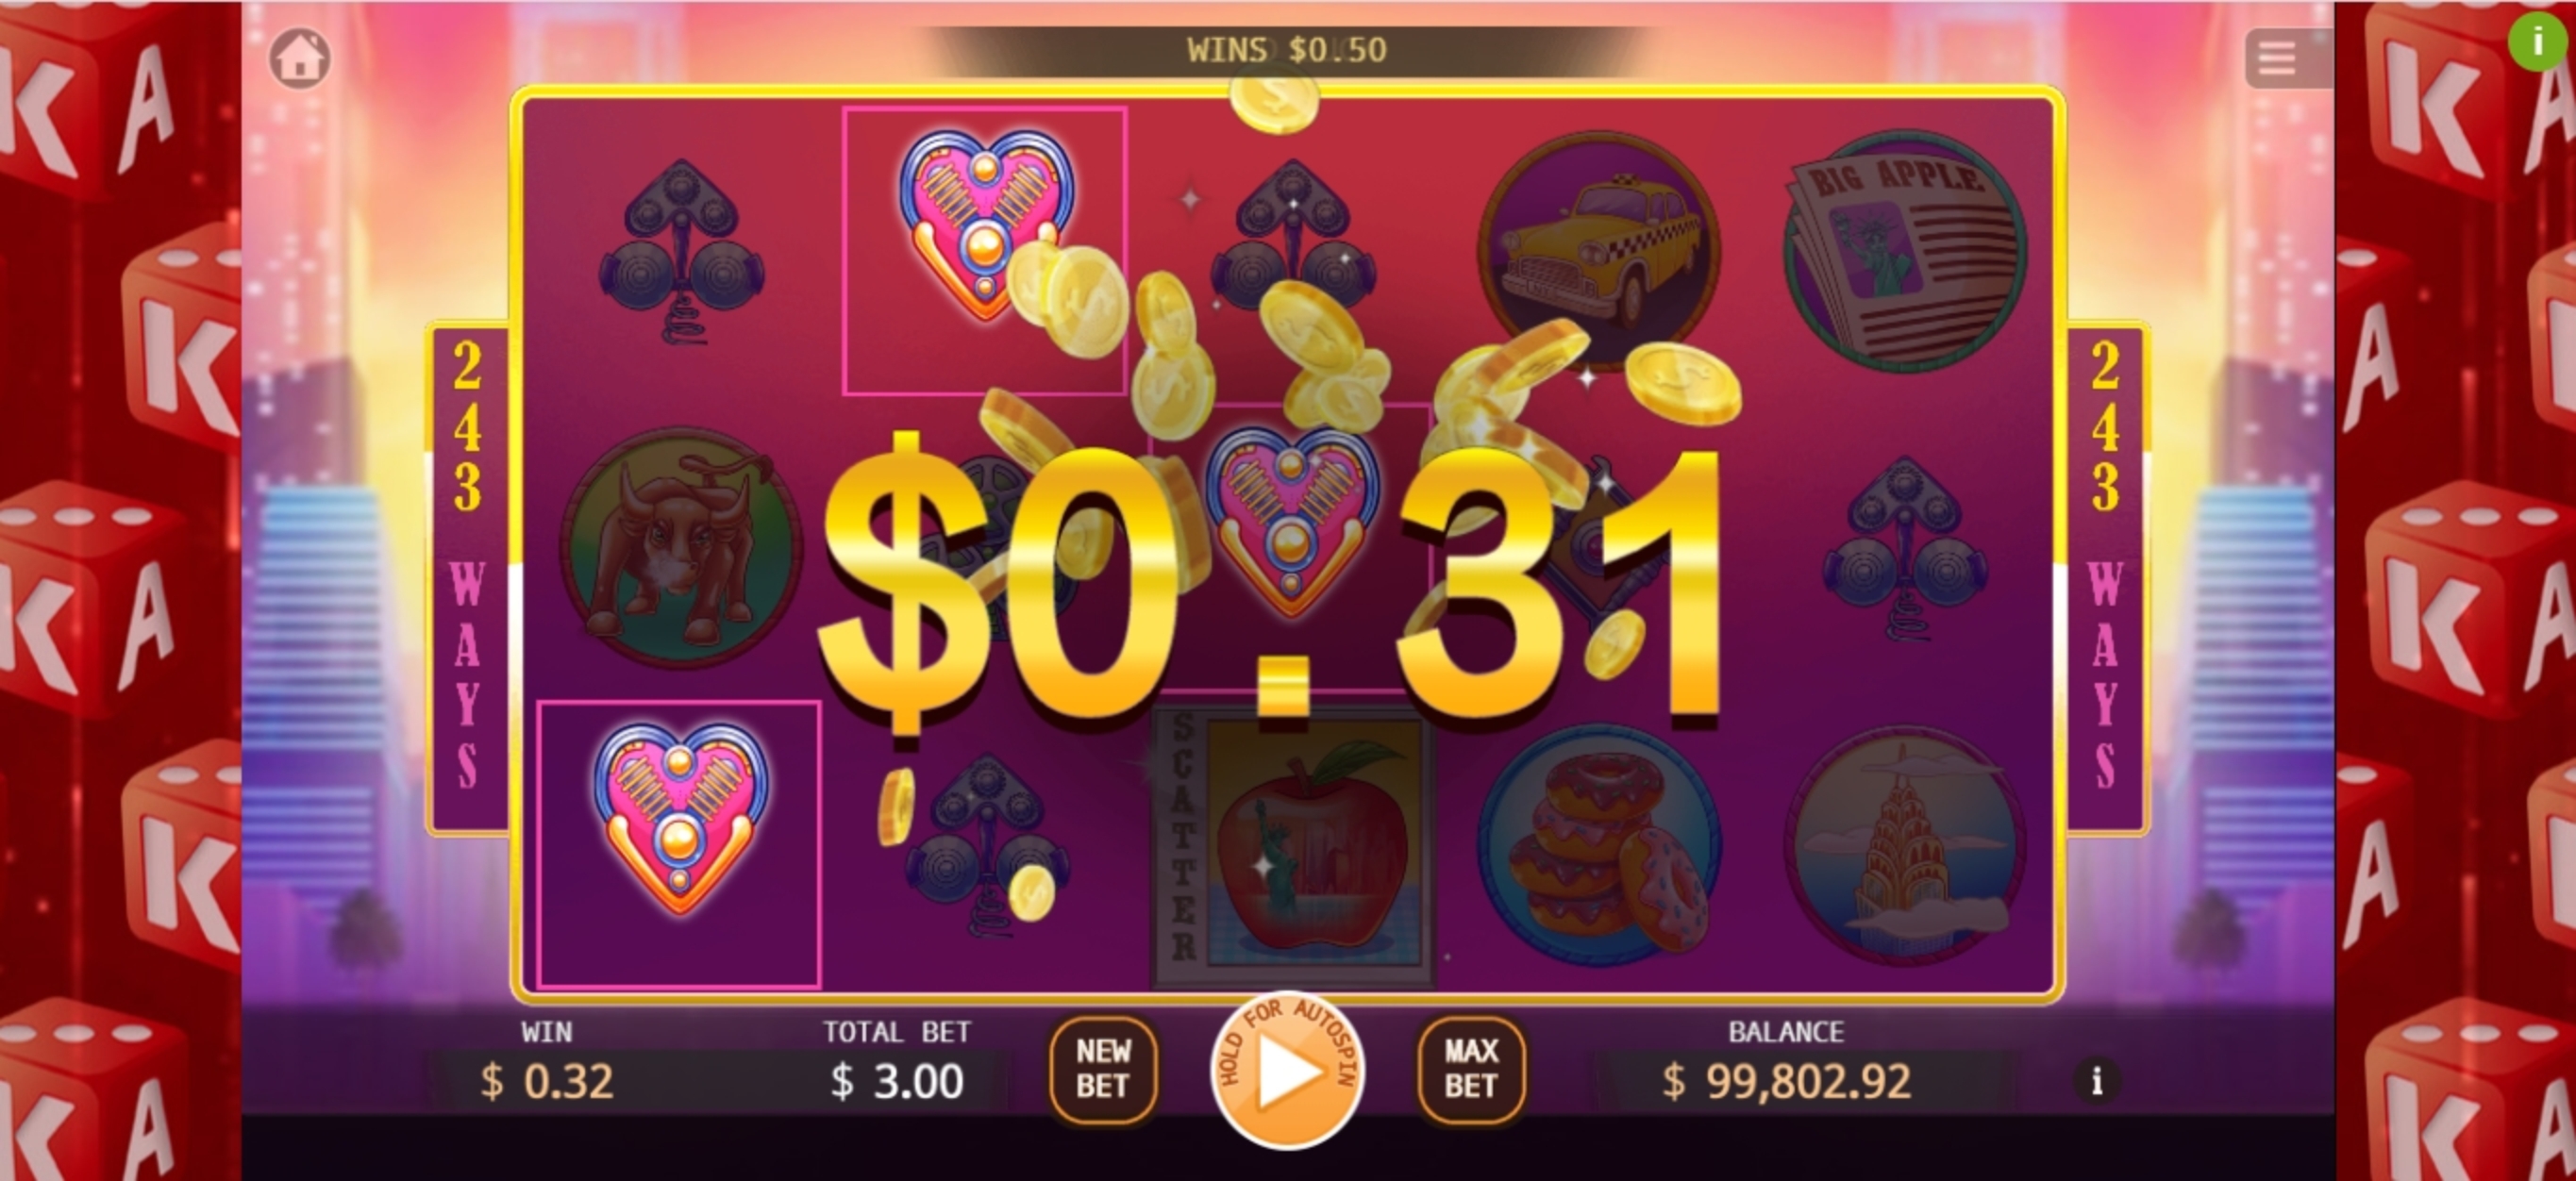 Big Apple Wins Slot Machine